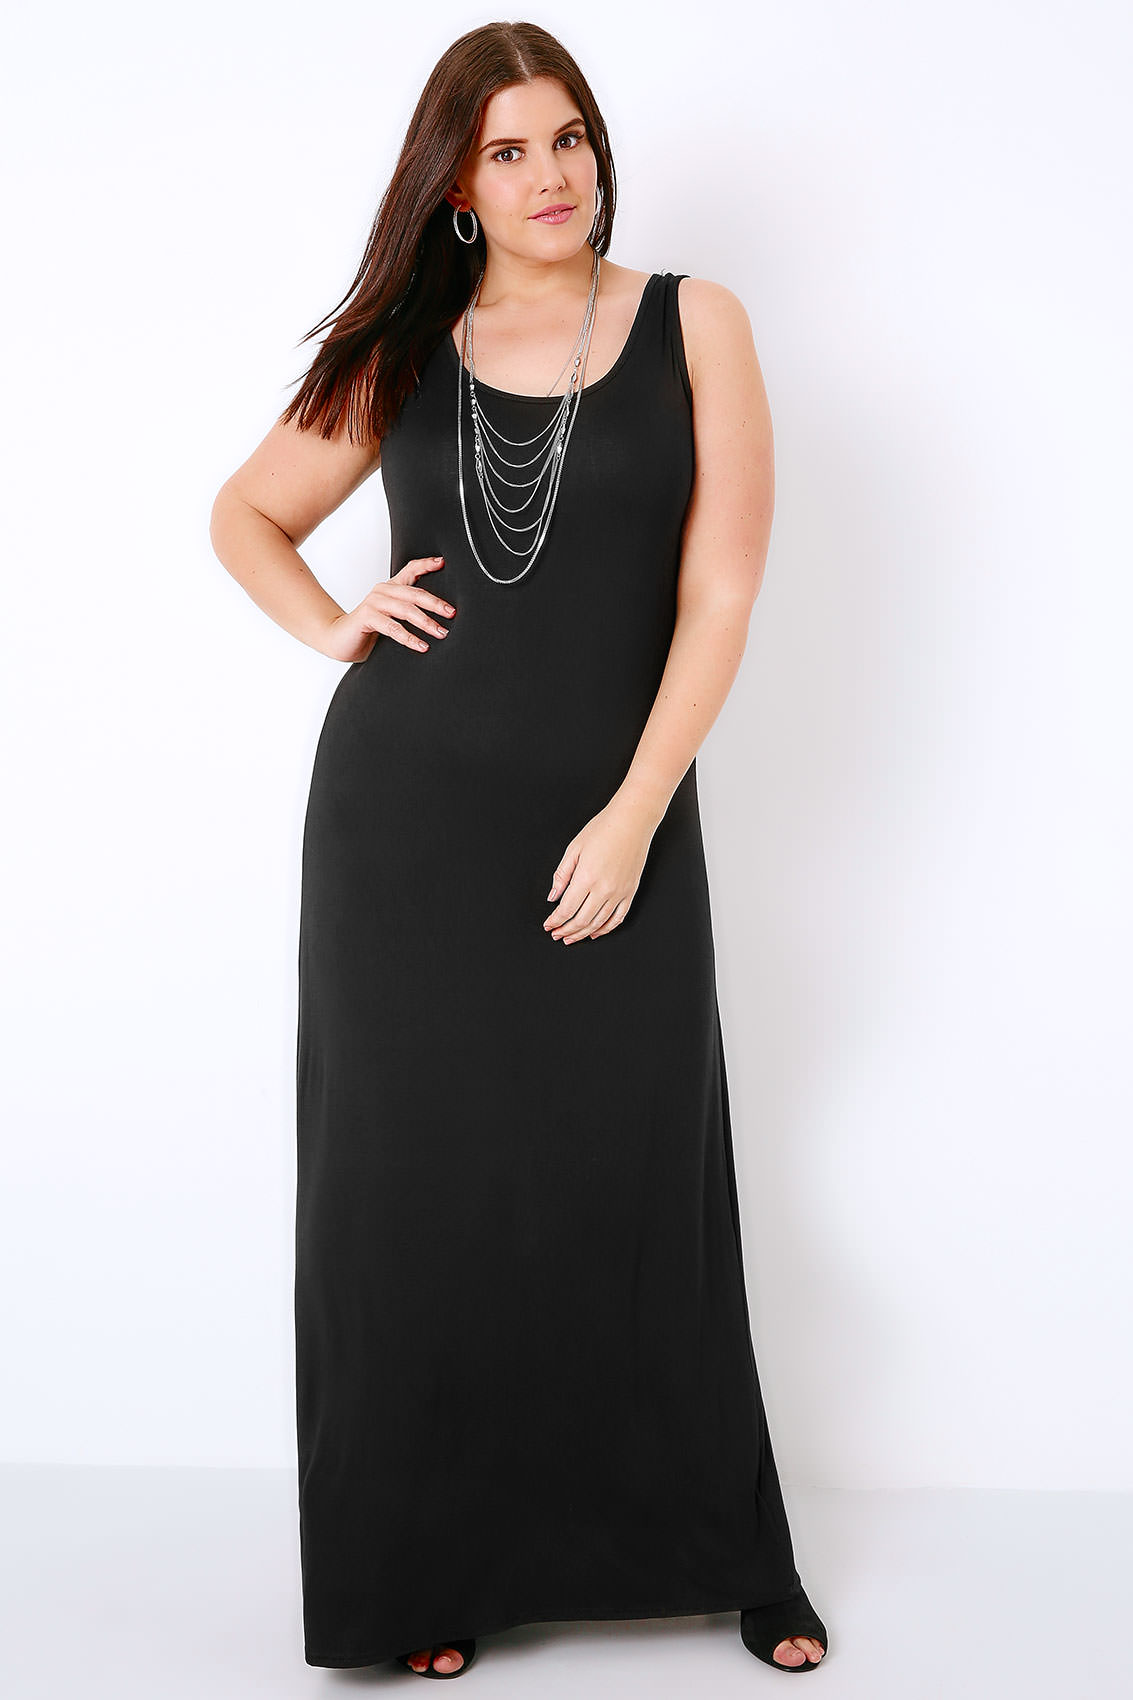 Black Plain Sleeveless Jersey Maxi Dress Plus Size 16 To 36